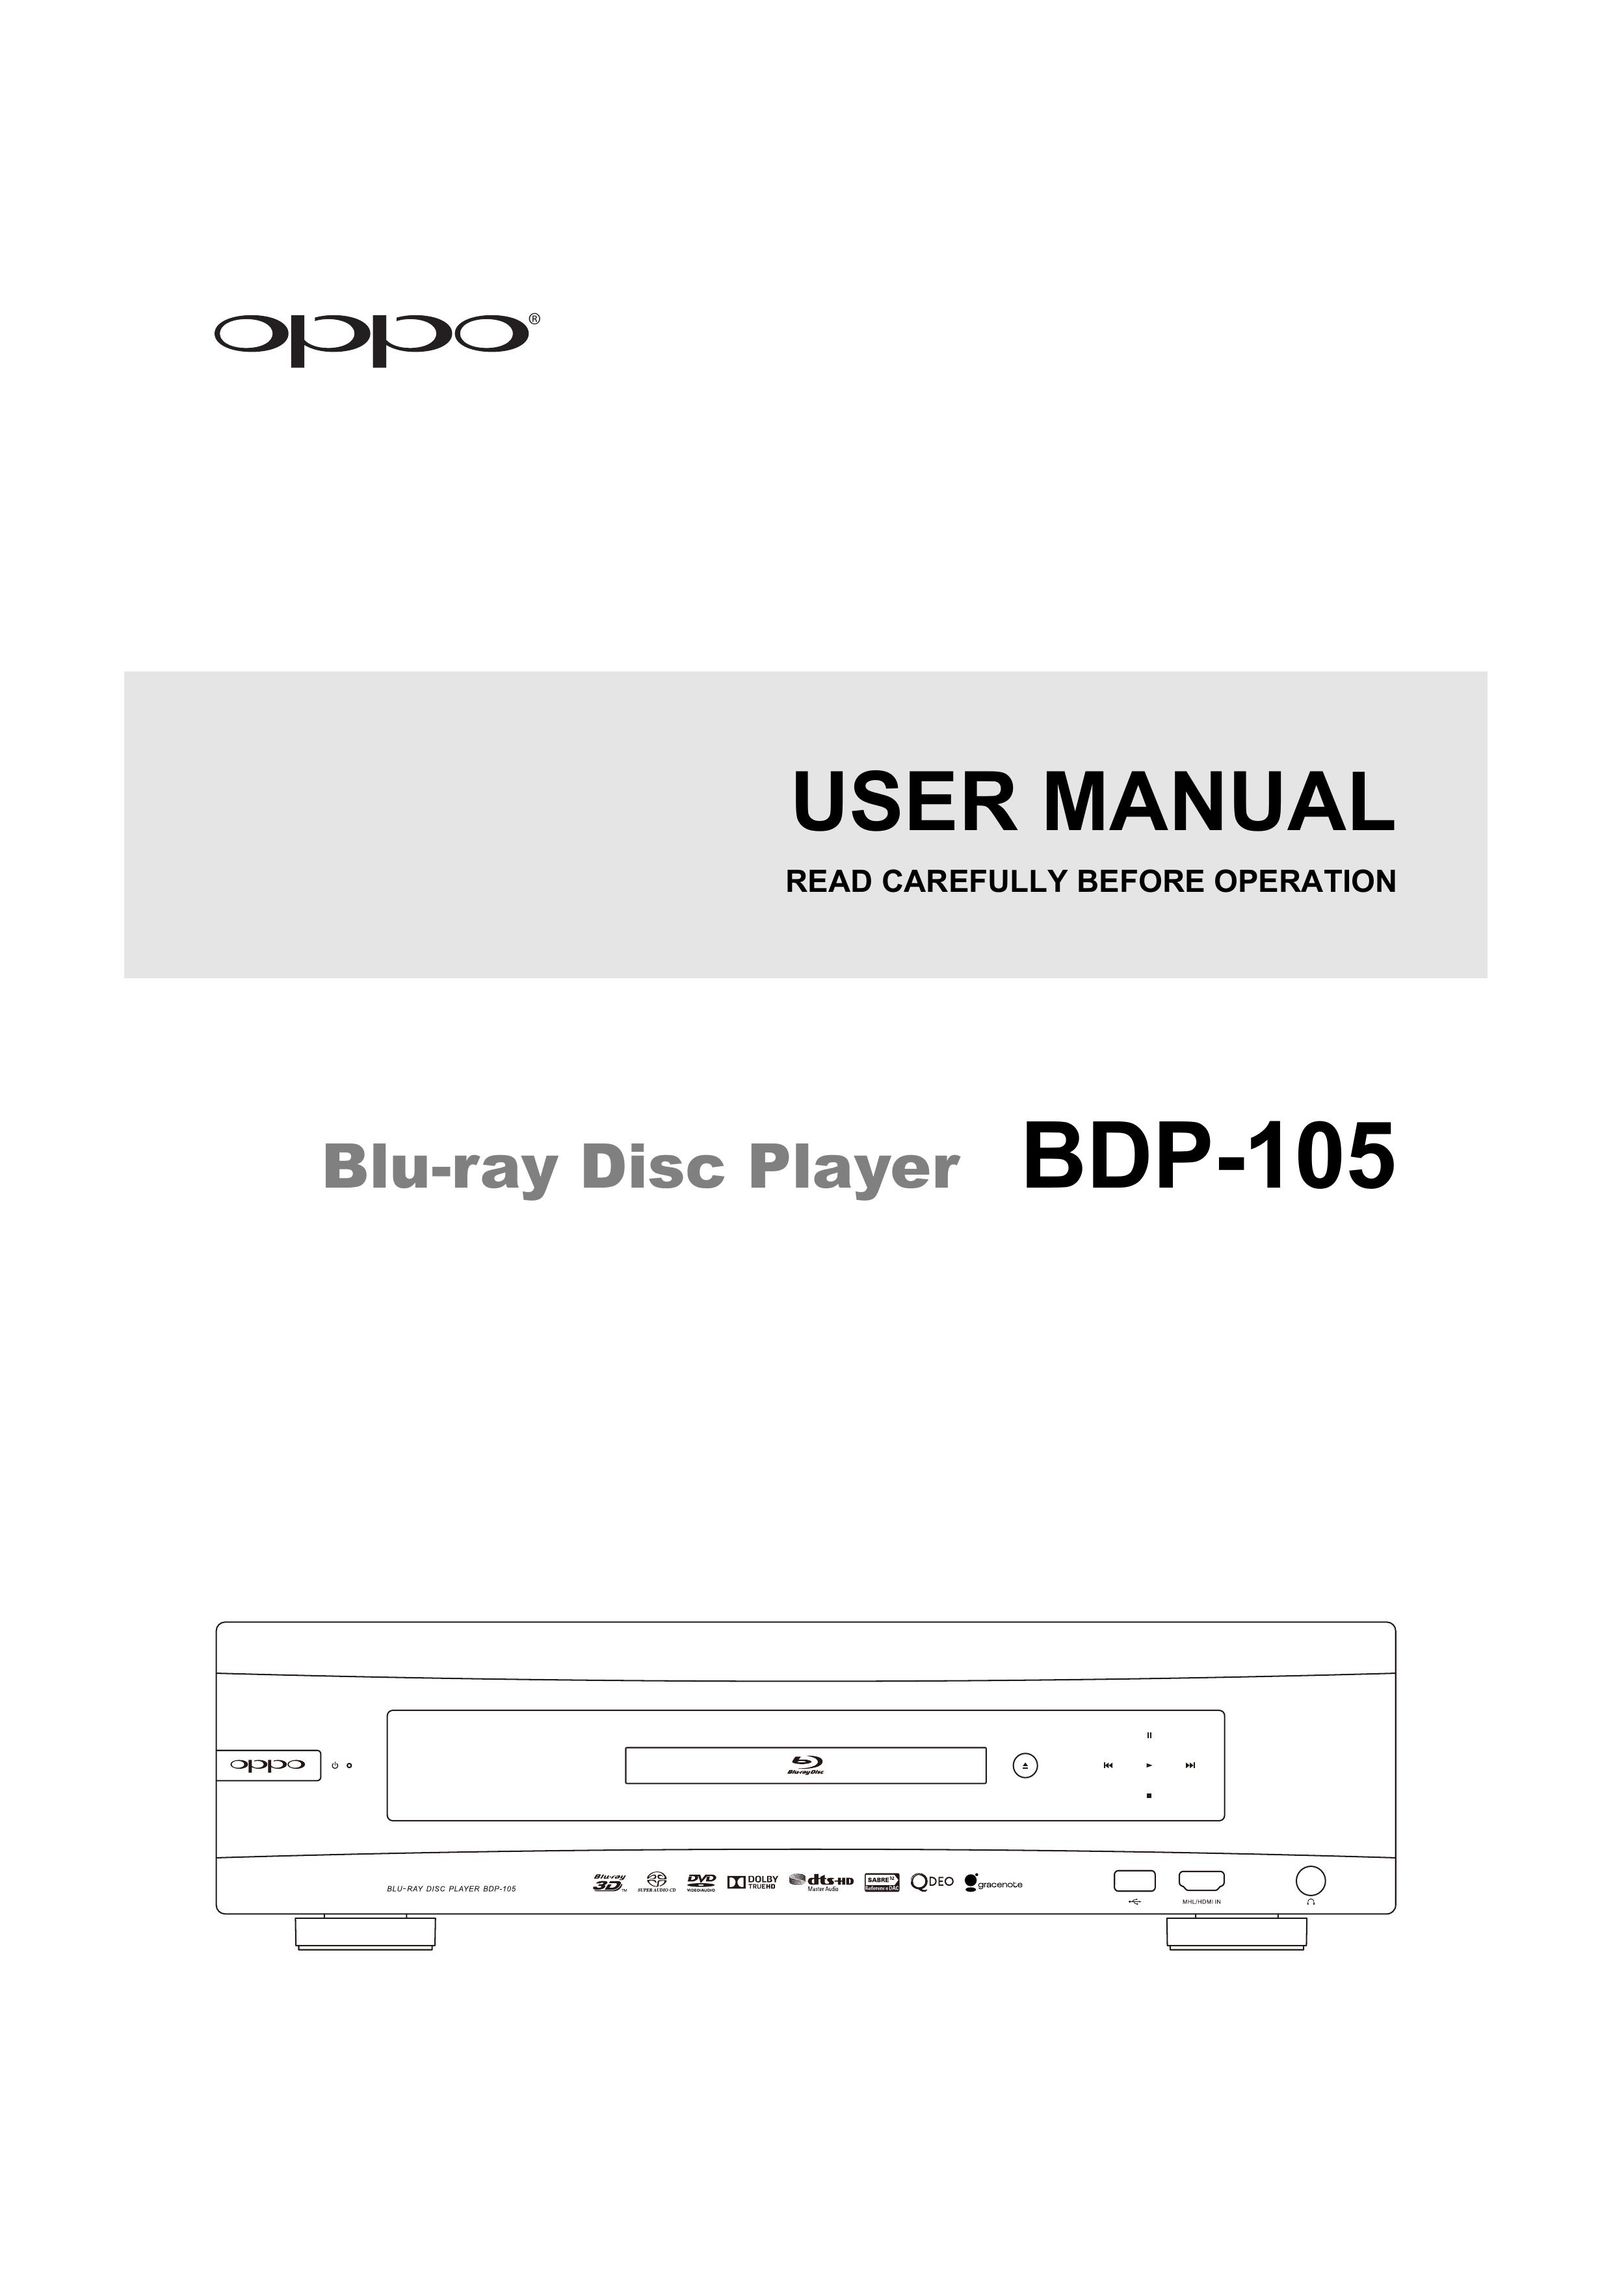 OPPO Digital BDP-105 Blu-ray Player User Manual